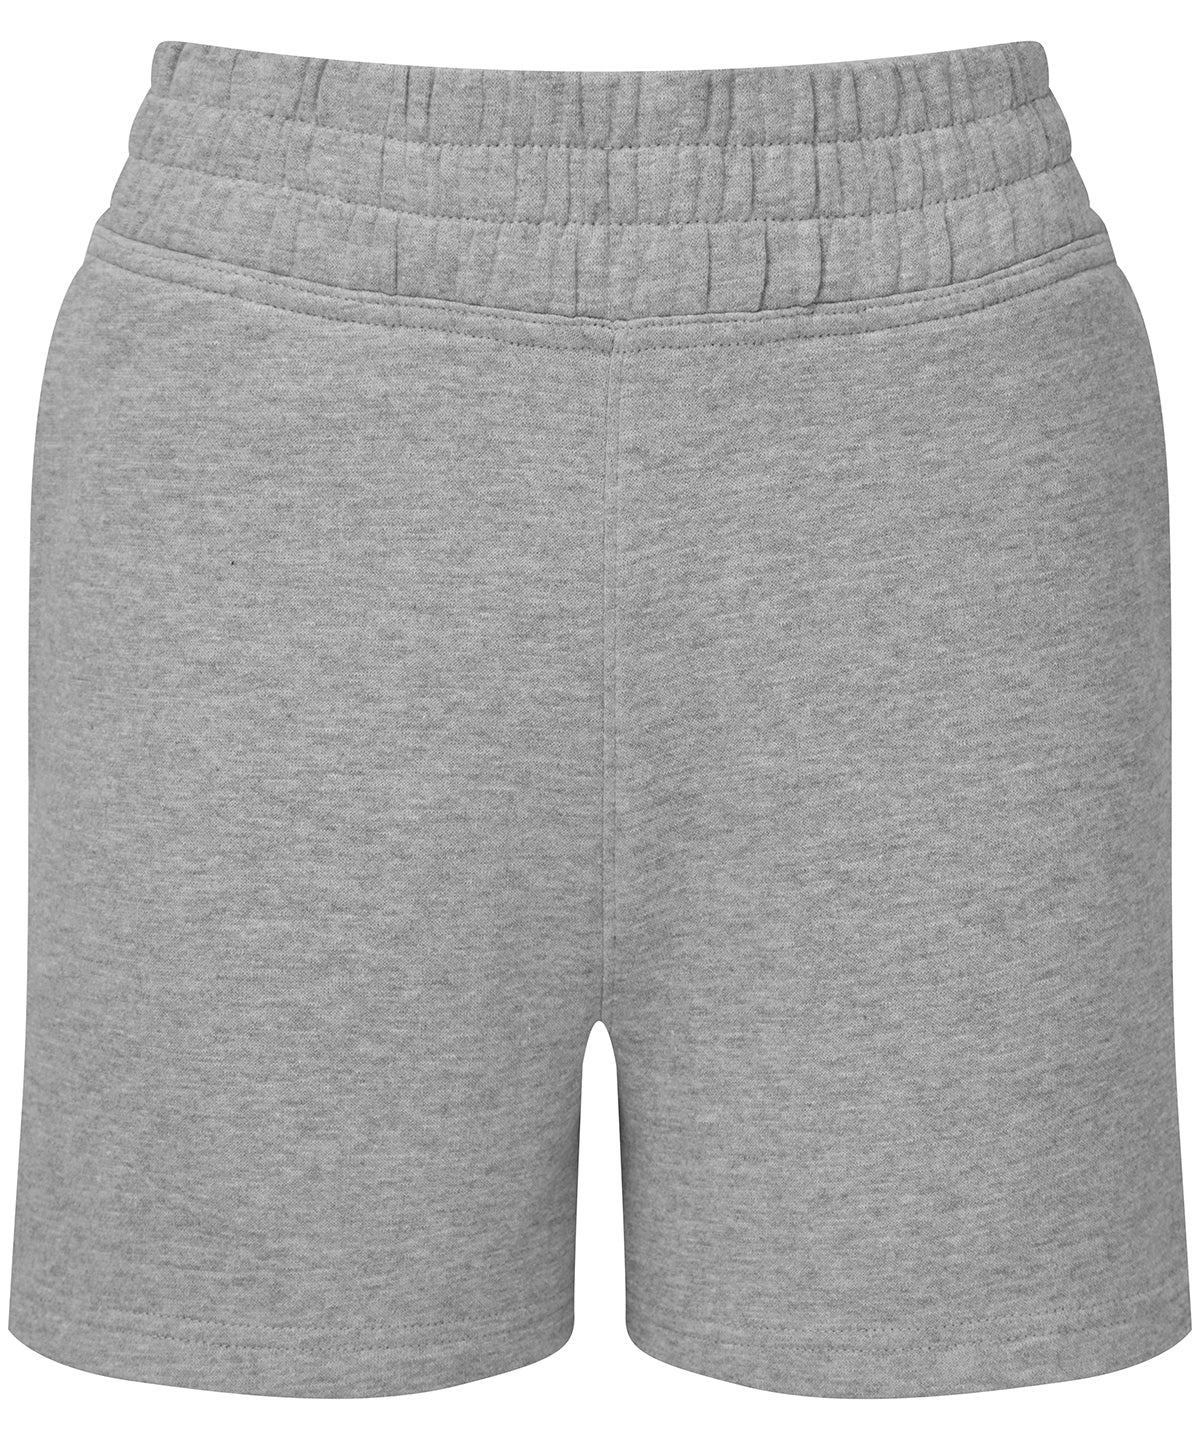 Stuttbuxur - Women's TriDri® Jogger Shorts